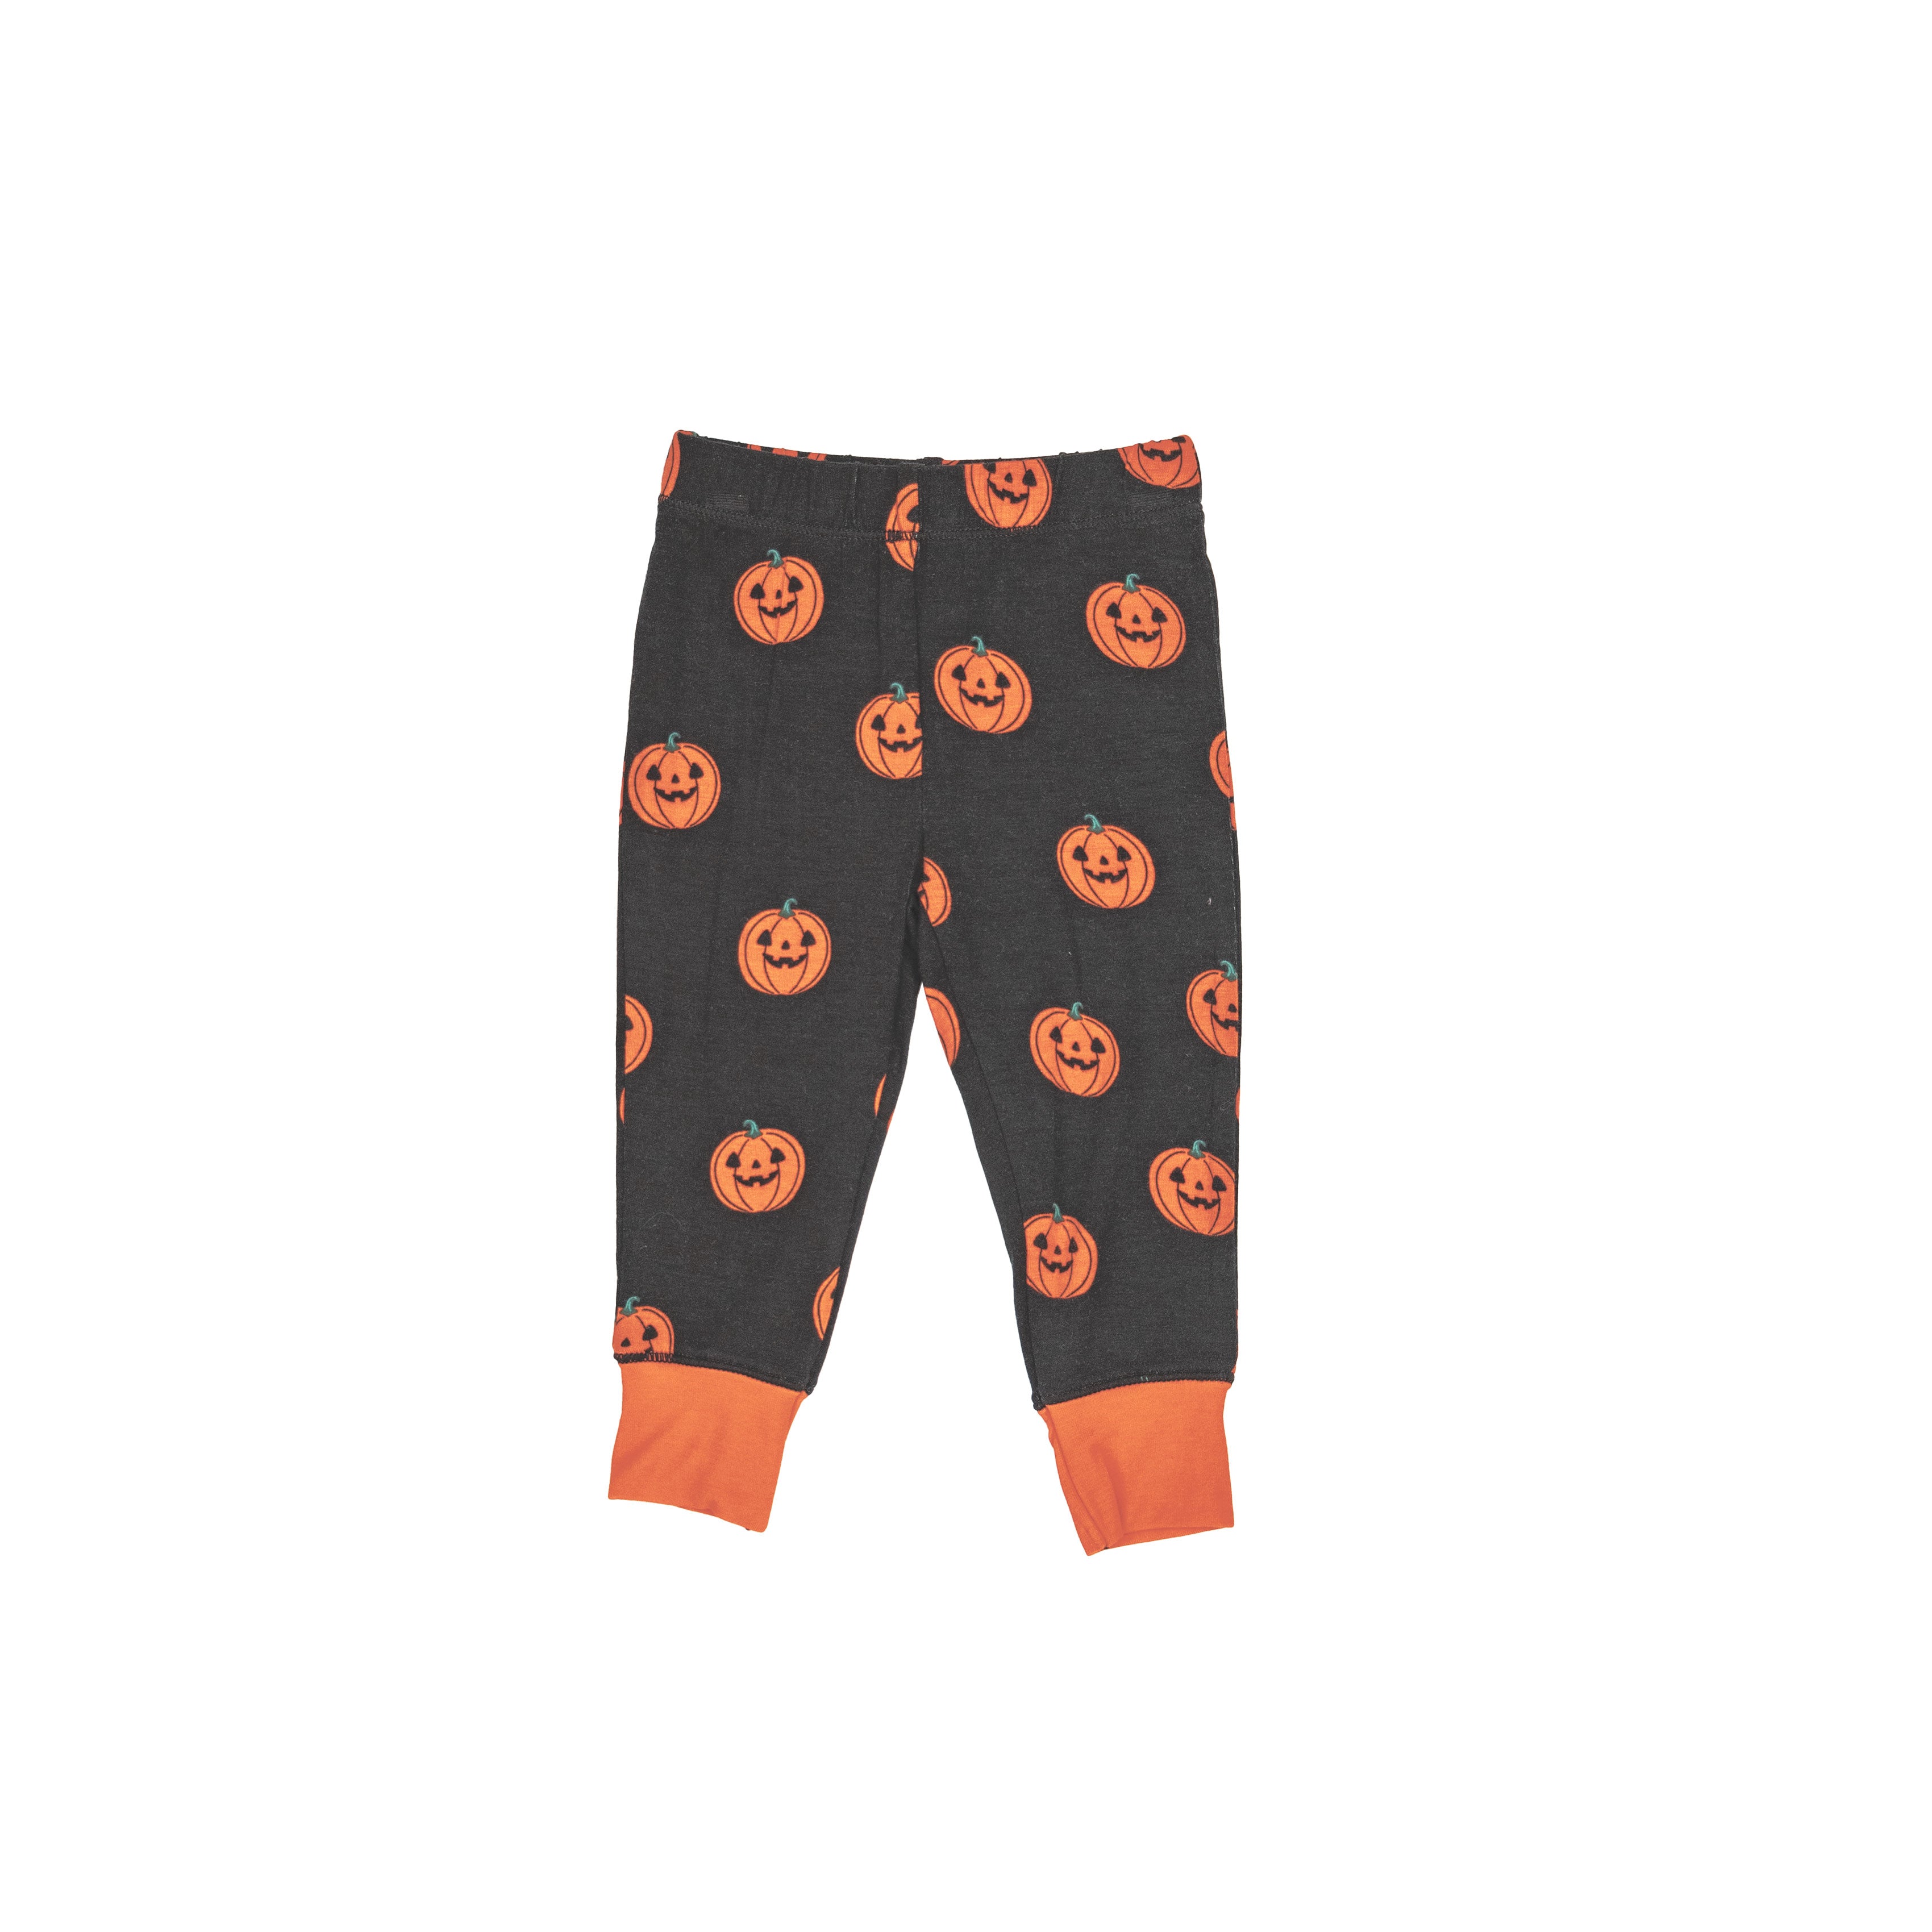 black lounge pants with orange jack o lantern print and orange cuffs on ankles